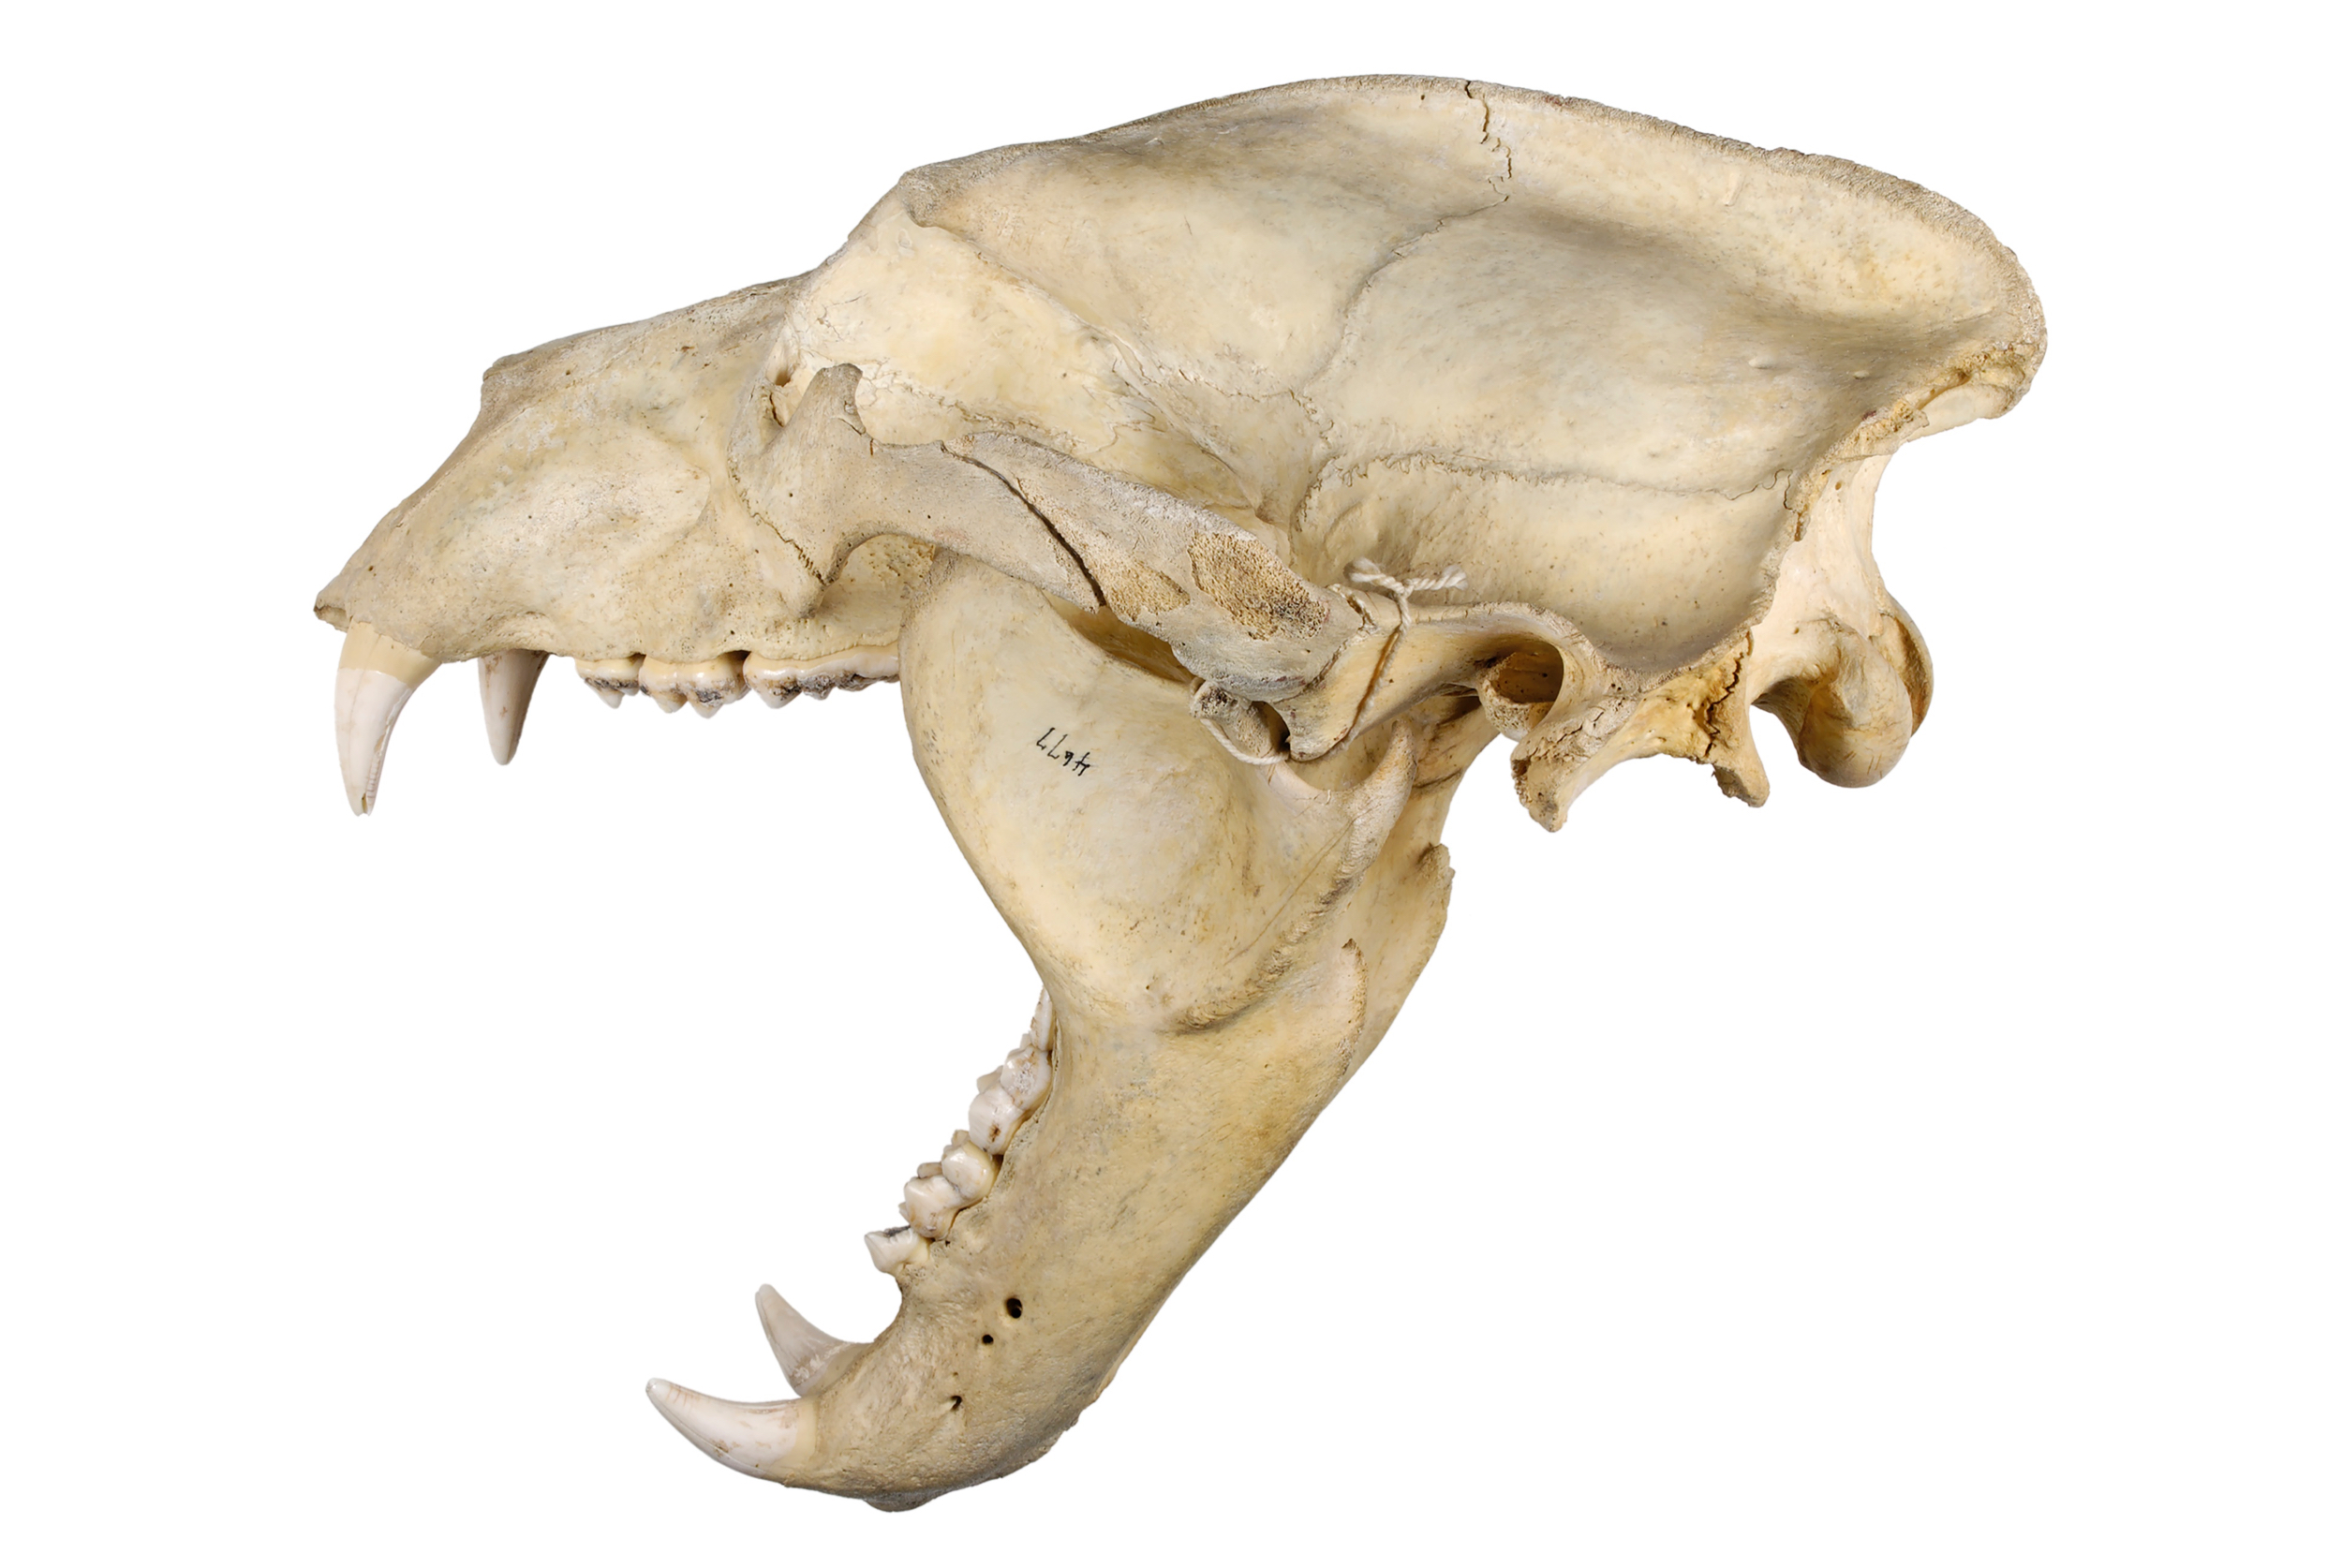   bear skull 1   8" x 12" or 12" x 18"  2007    